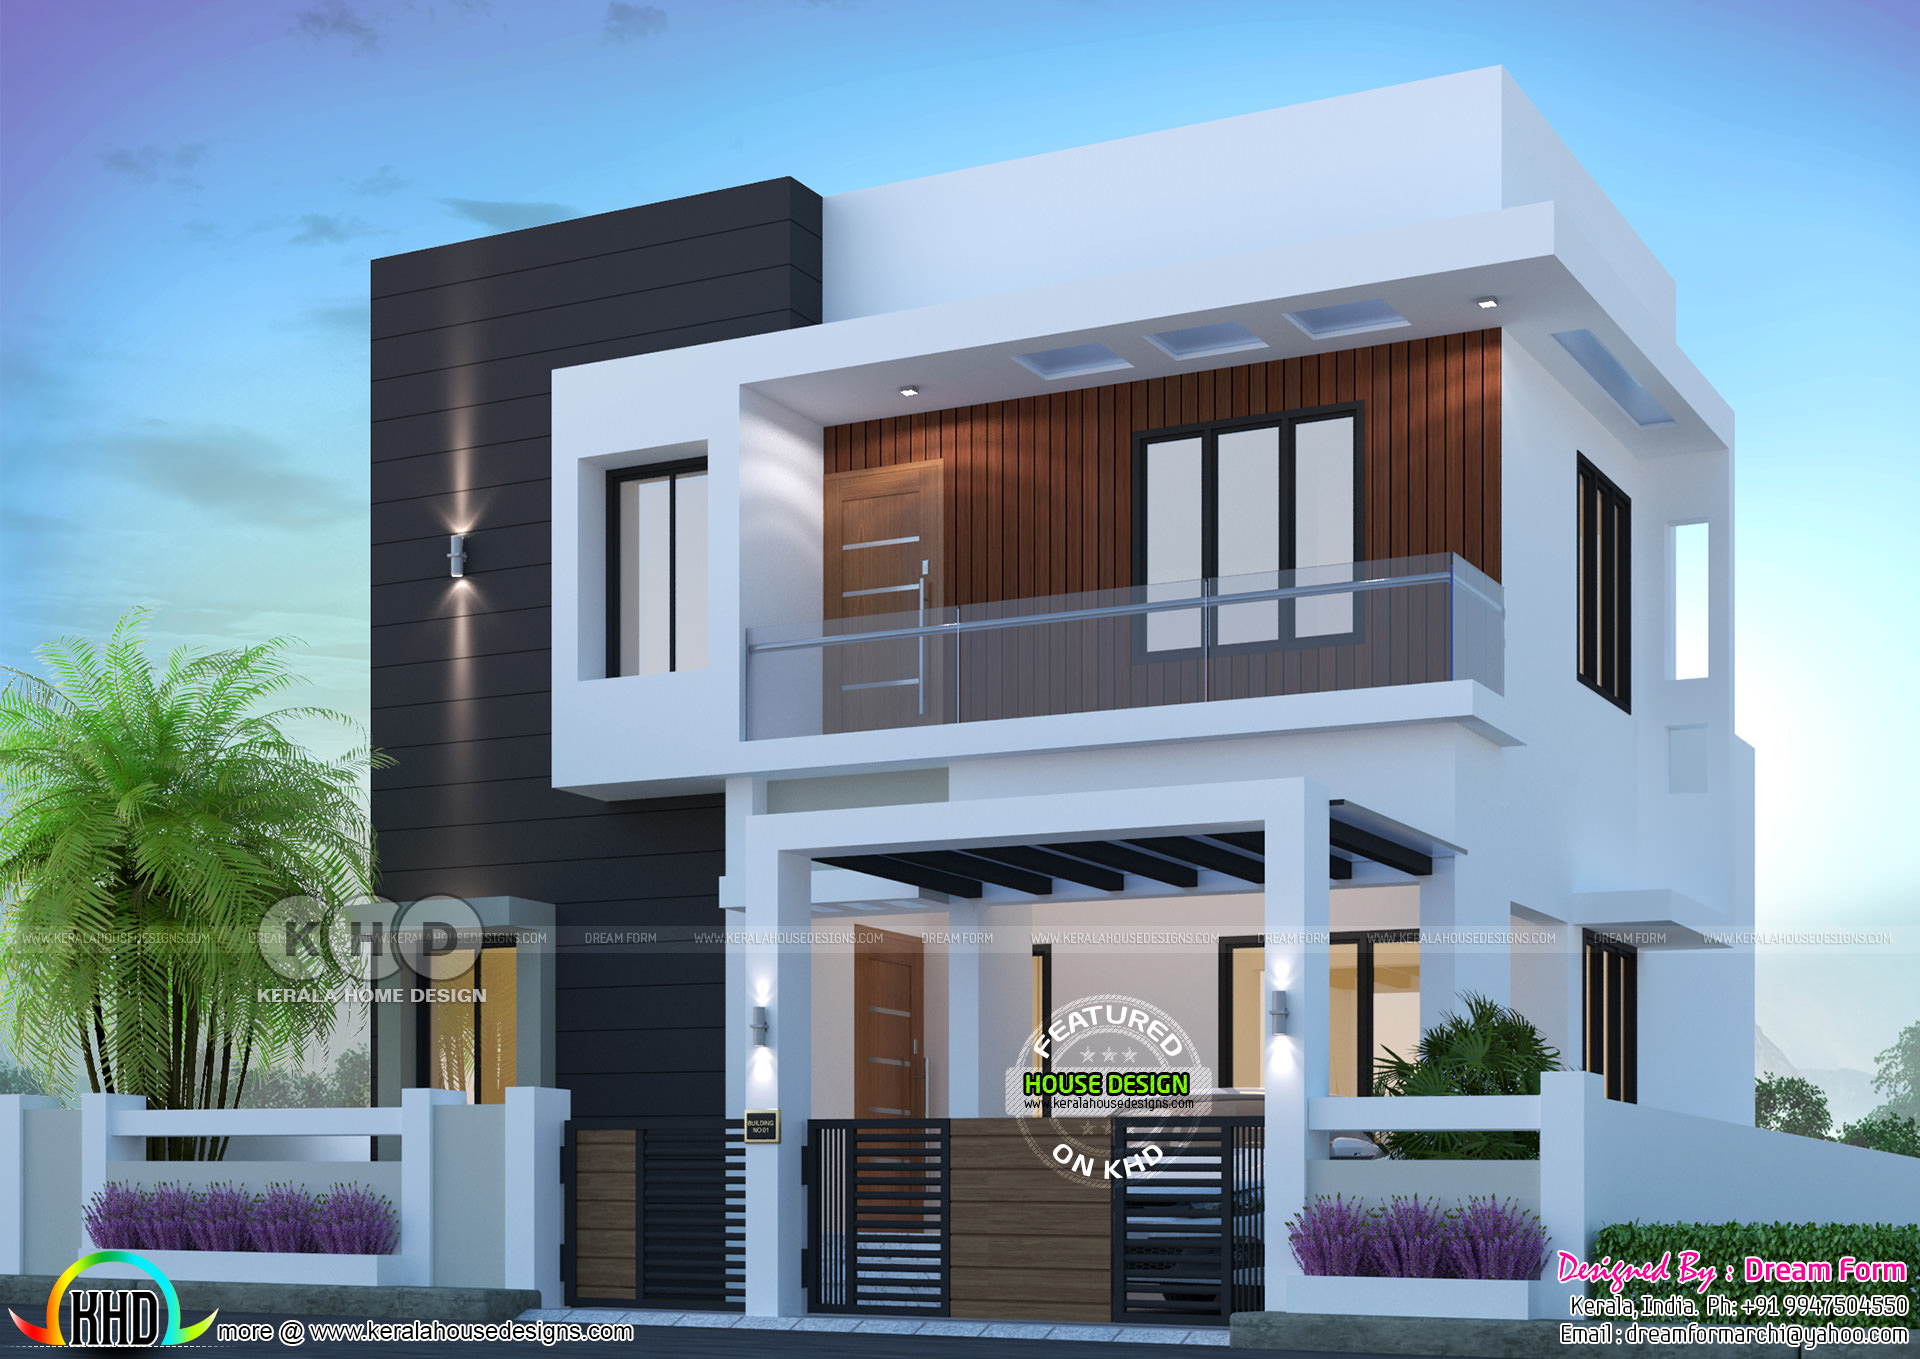  1500  sq  ft  3 bedroom modern home  plan  Kerala  home  design 